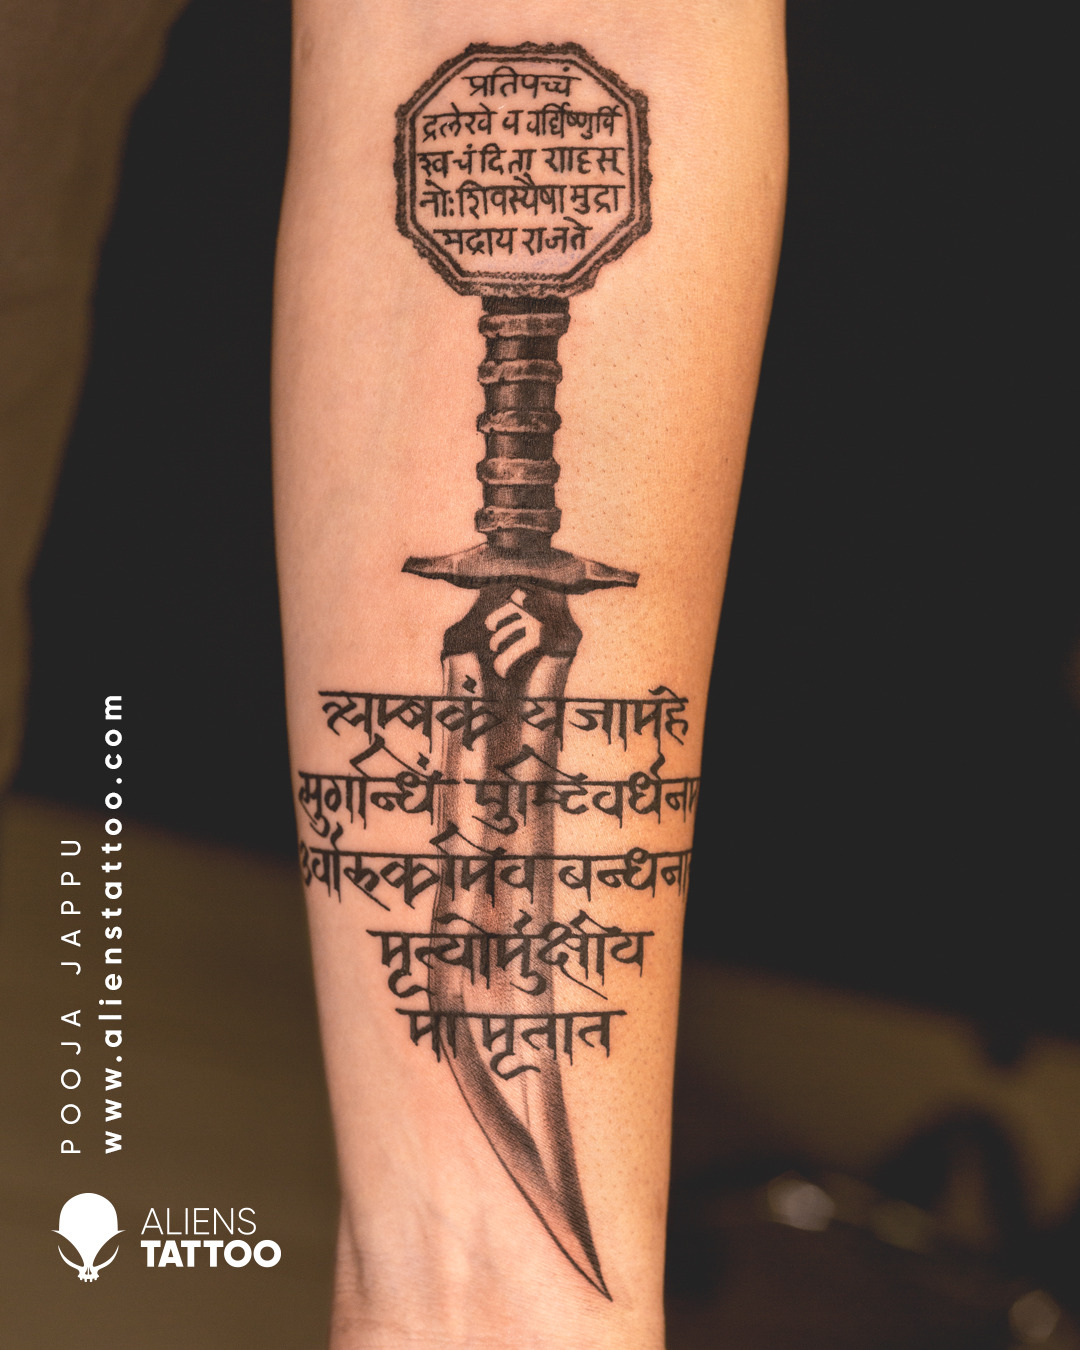 Shiva potrait tattoo in mahamrityunjay mantra band tattoo formation Tattoo  artist  karandgstattoo tattoo shiva shivapotraits  Instagram